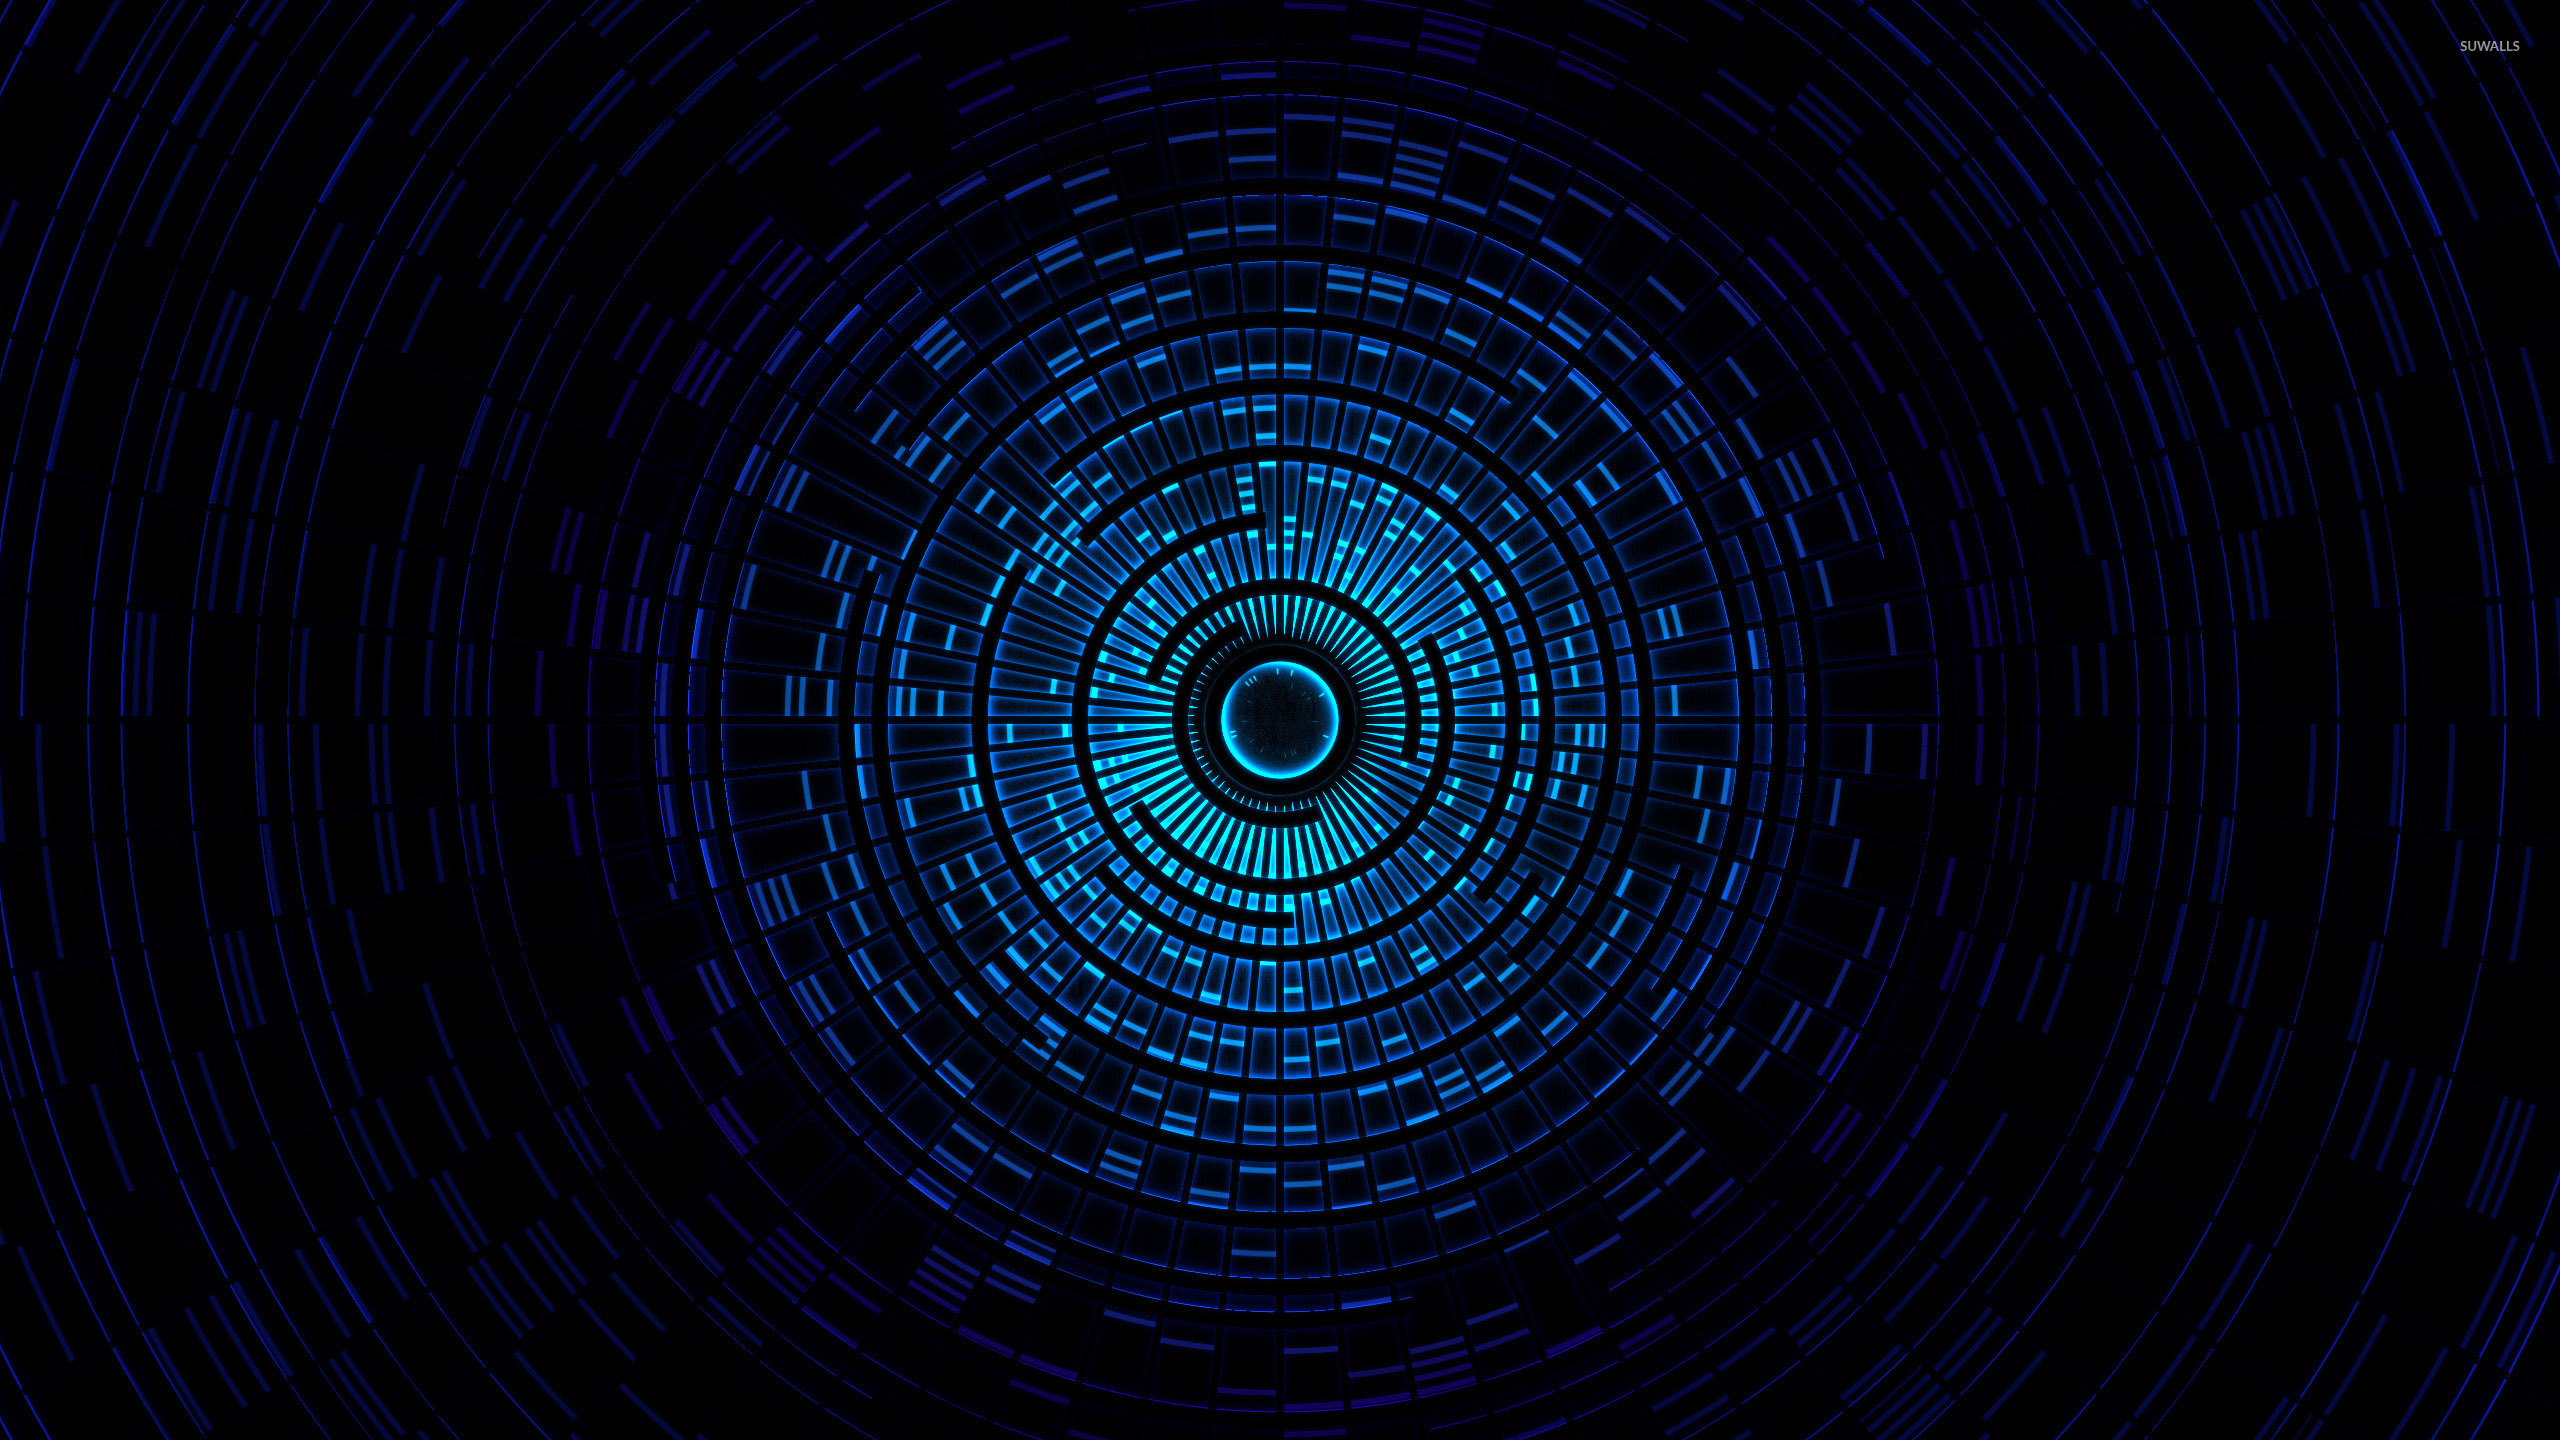 Circular abyss wallpaper - Digital Art wallpapers - #54256